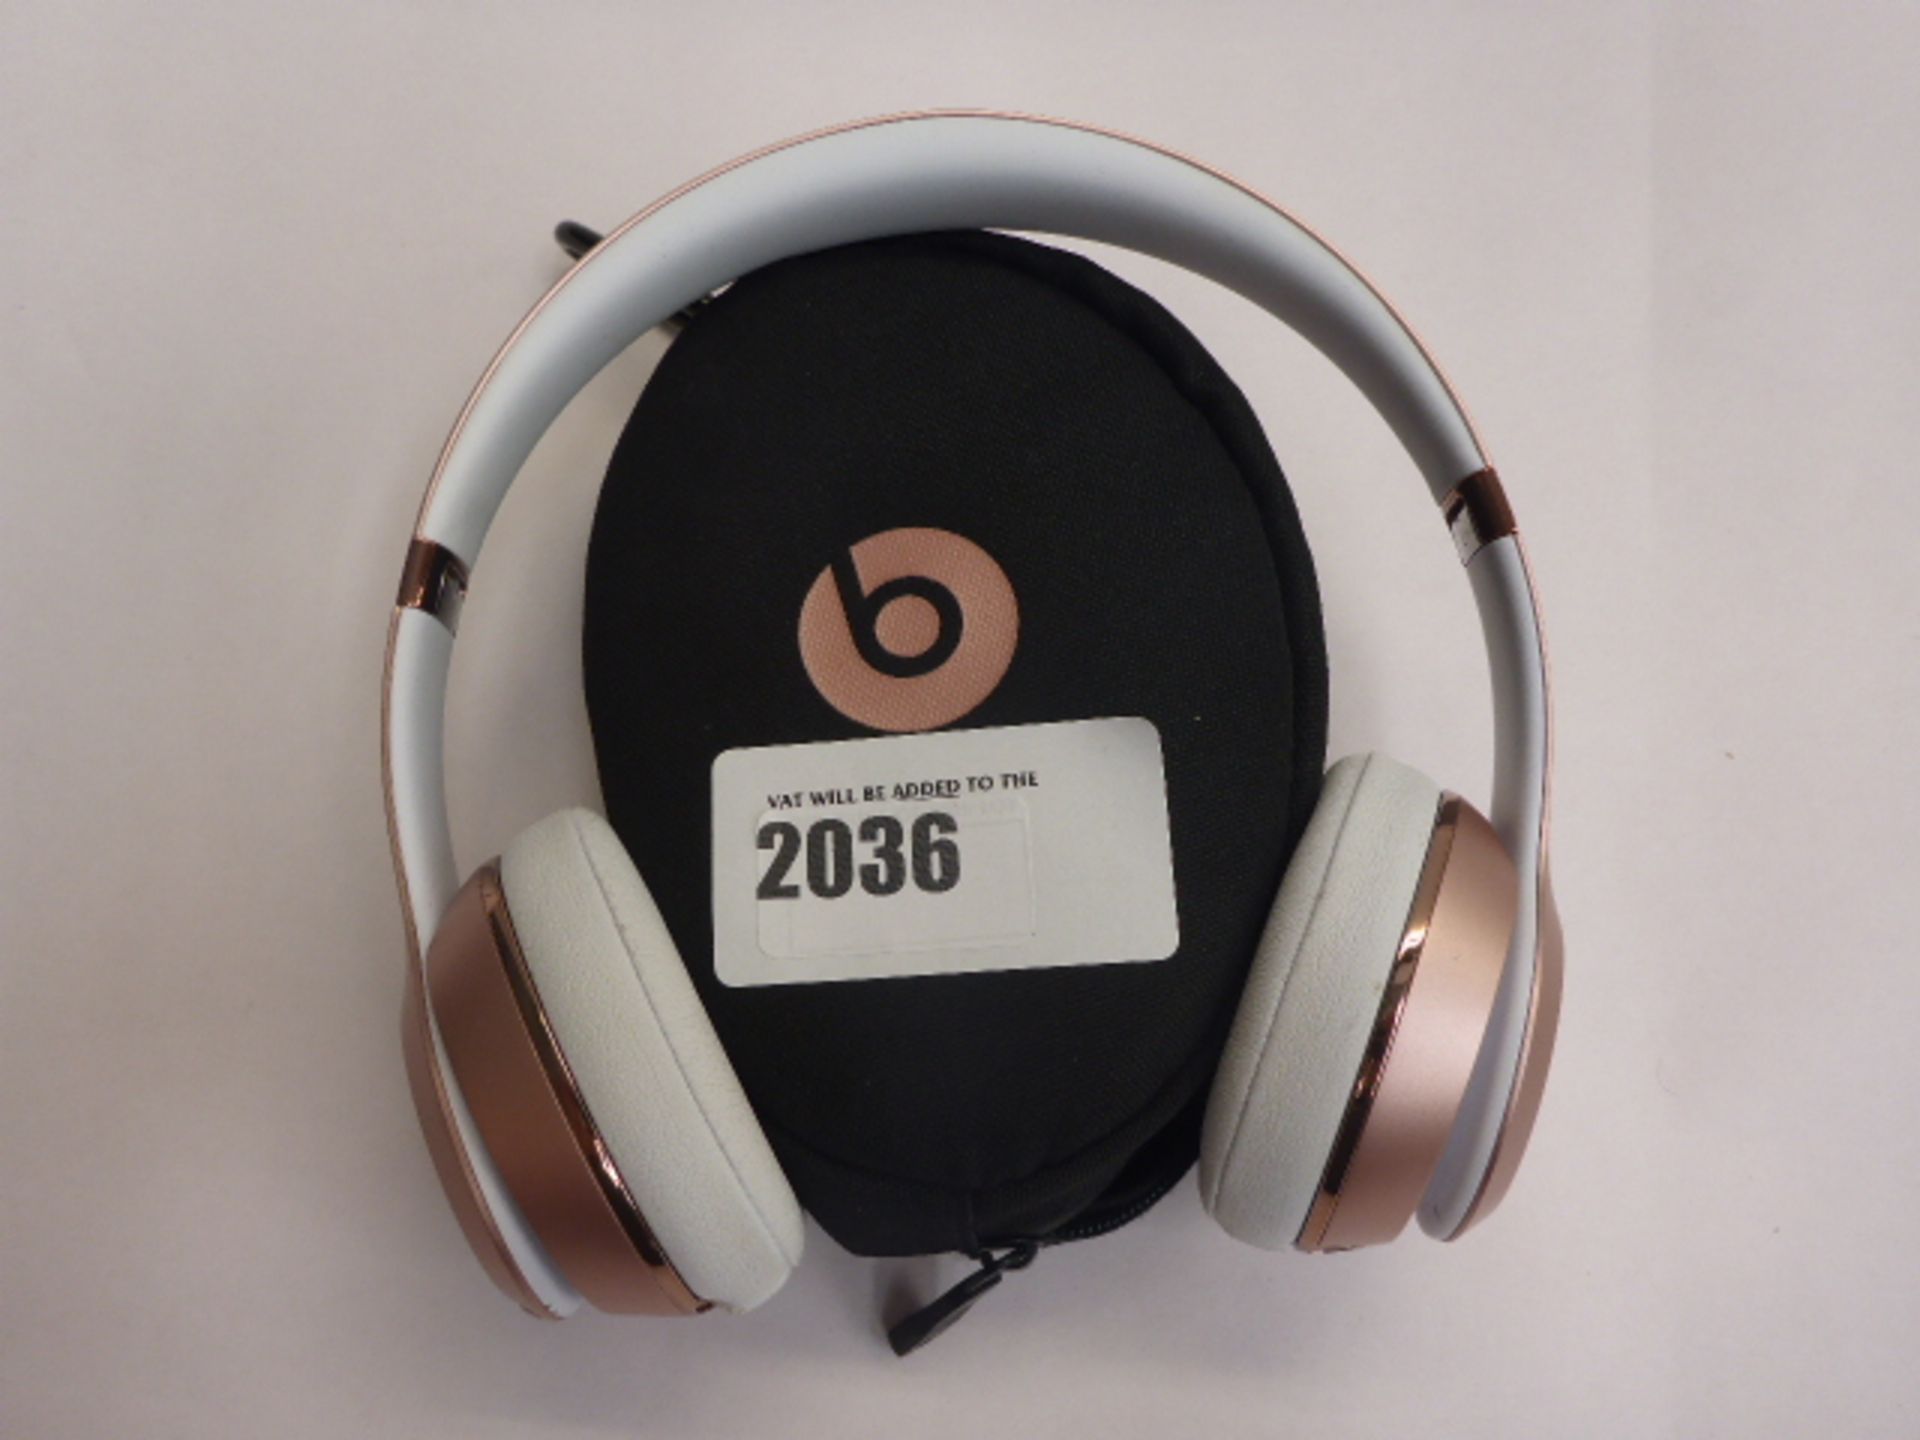 Beats Solo3 wireless headphones in rose gold